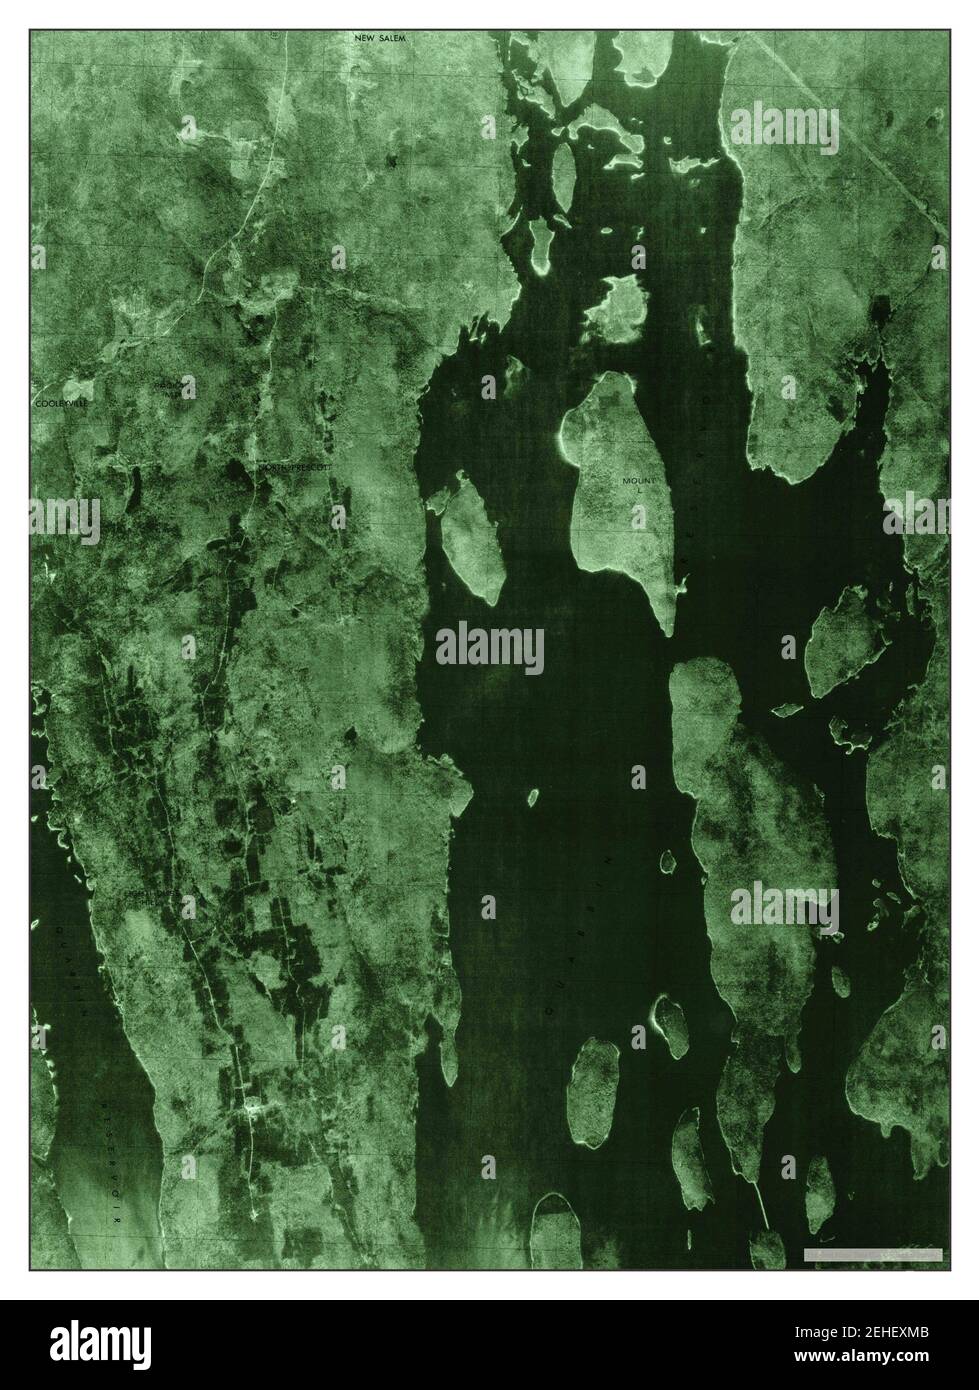 Quabbin Reservoir, Massachusetts, map 1975, 1:25000, United States of America by Timeless Maps, data U.S. Geological Survey Stock Photo